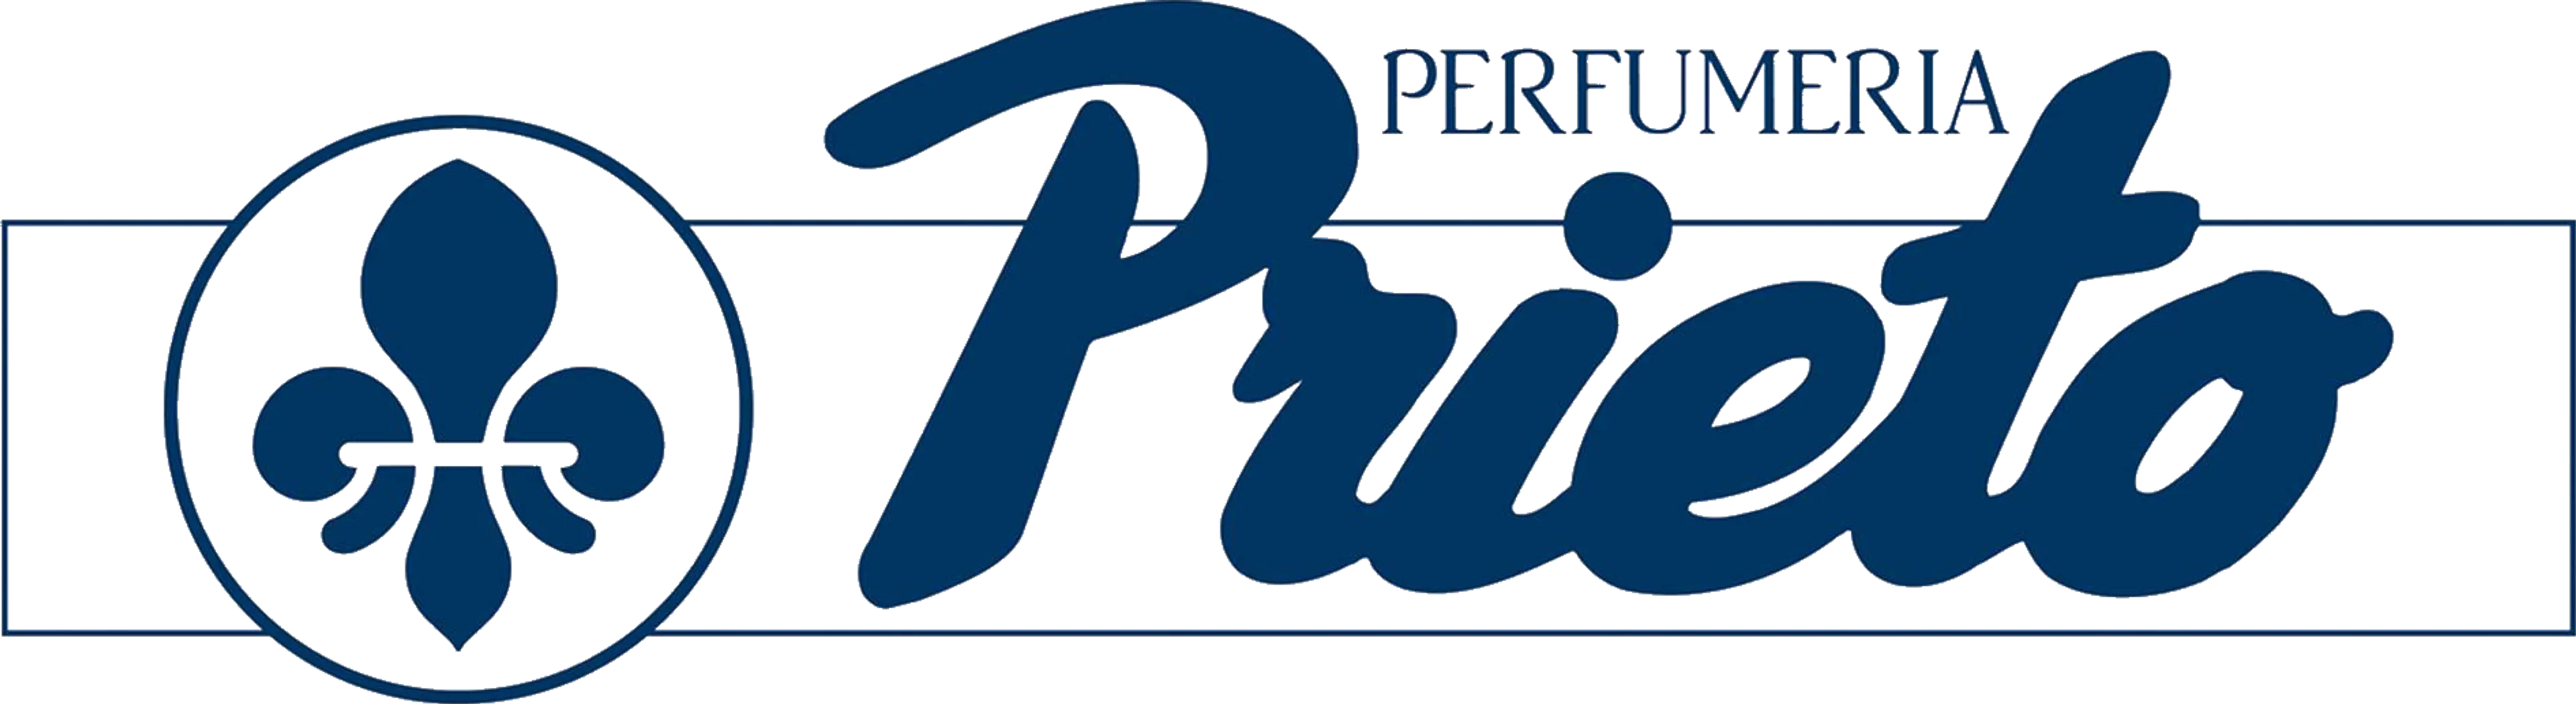 PERFUMERÍA PRIETO logo